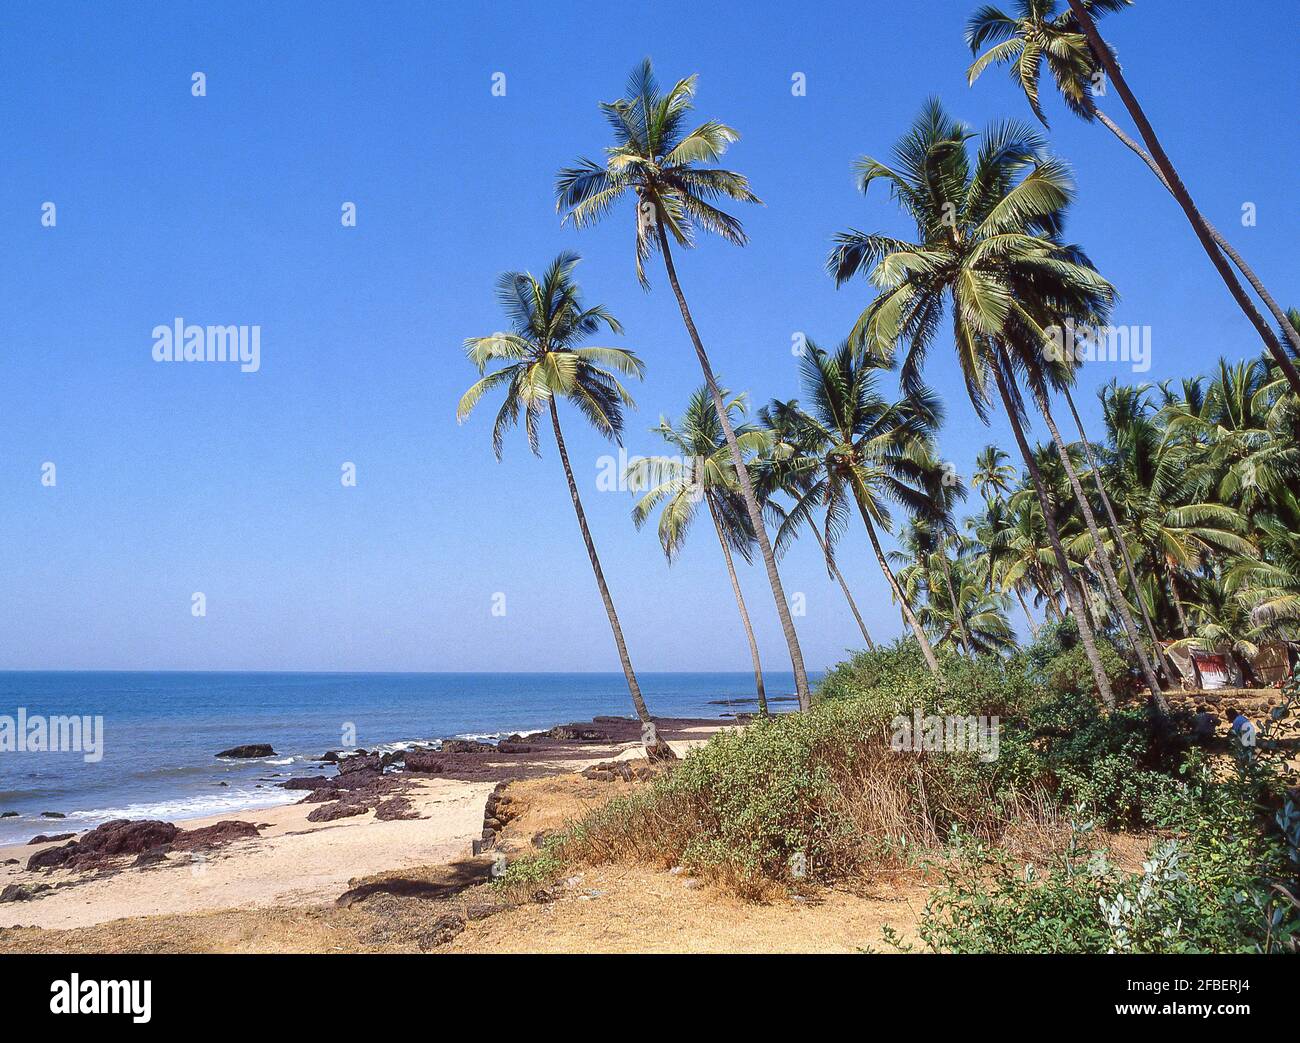 Anjuna Beach, Nord Goa, État de Goa, région de Konkan, République de l'Inde Banque D'Images